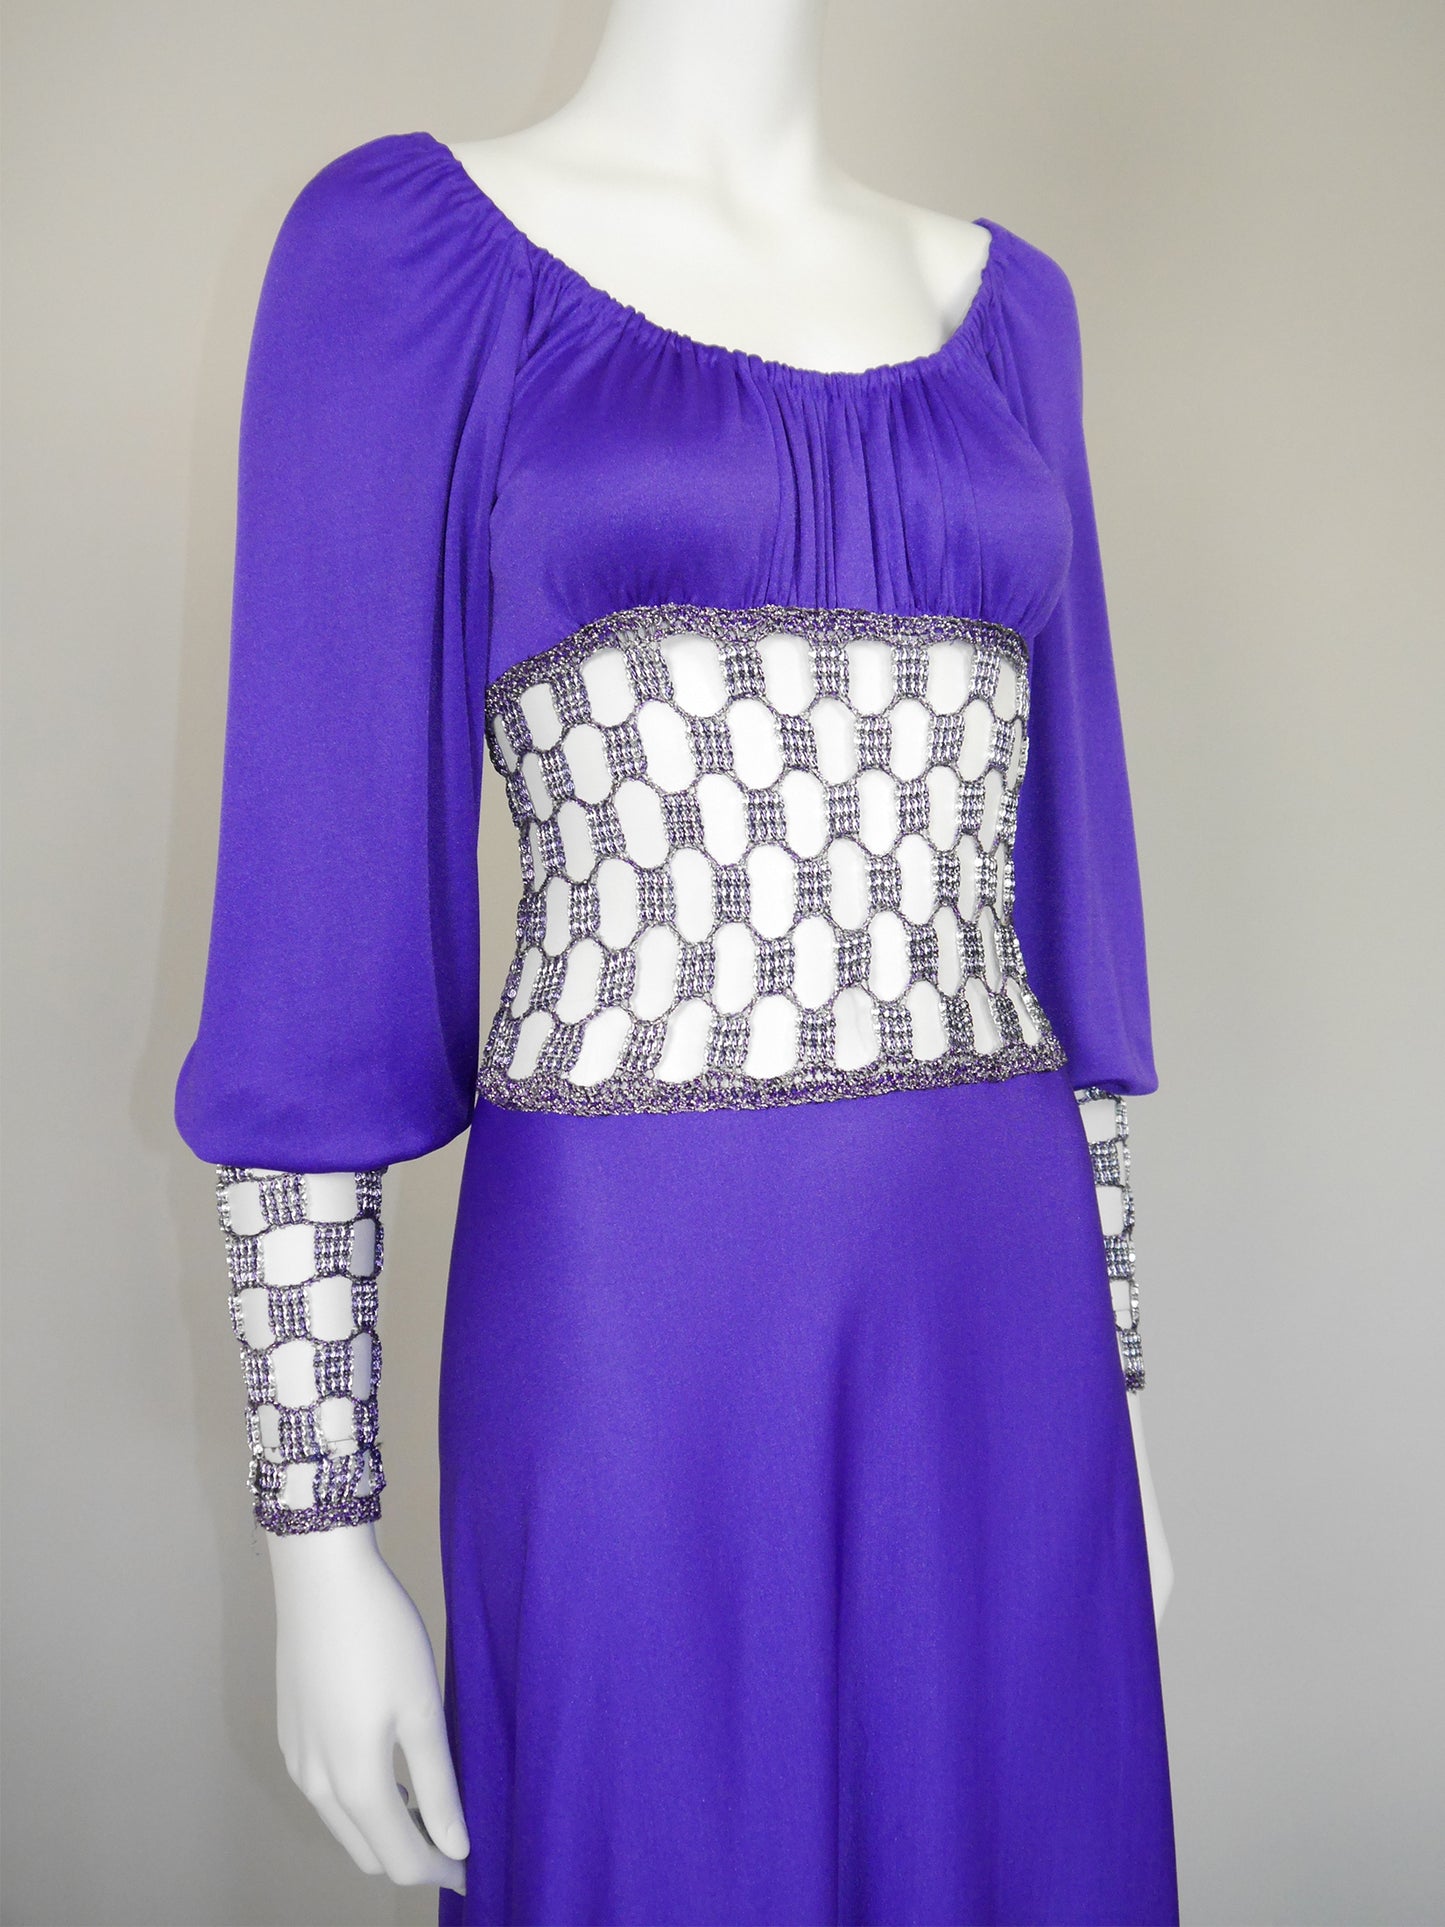 LORIS AZZARO 1970s Vintage Purple Crochet Chainmail Maxi Evening Gown Size S